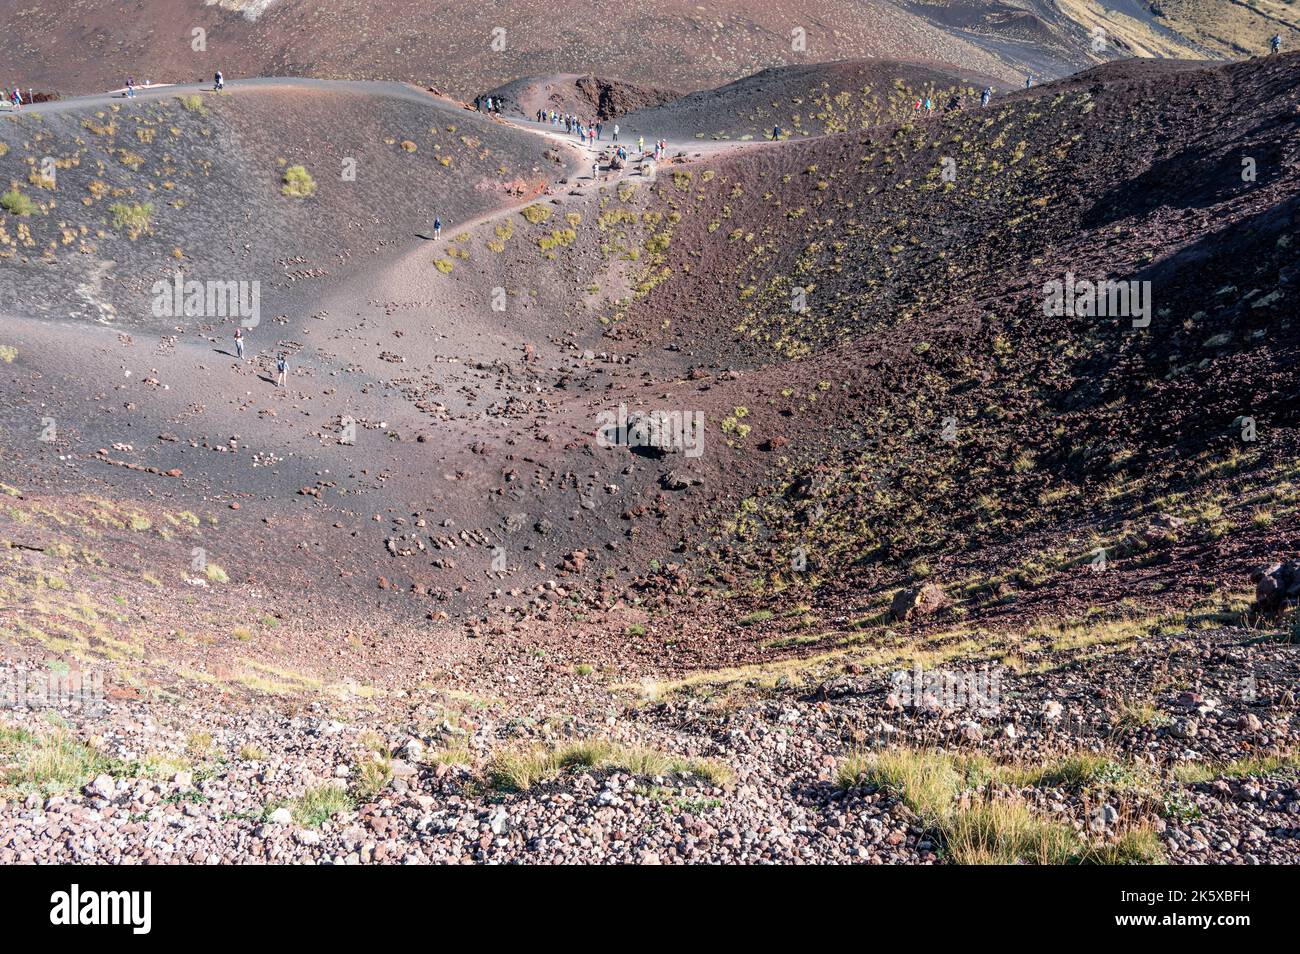 Ätna, Italien - 09-15-2022: Der wunderschöne Vulkan Ätna mit seinen Silvestri-Kratern Stockfoto